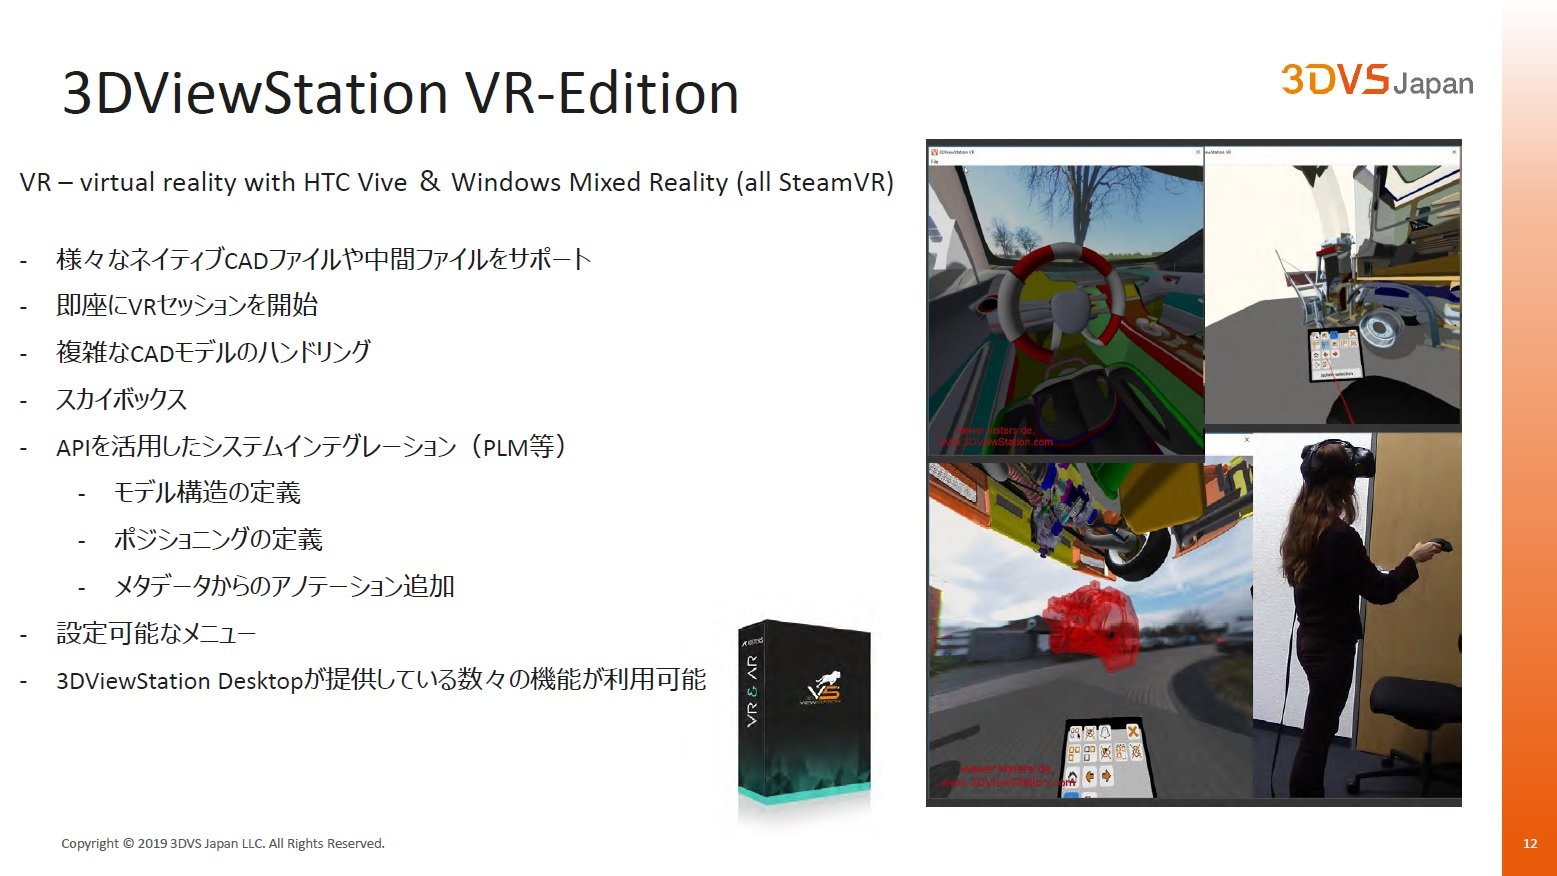 u3DViewStation VR Editionvɂā@oTF3DVS Japan